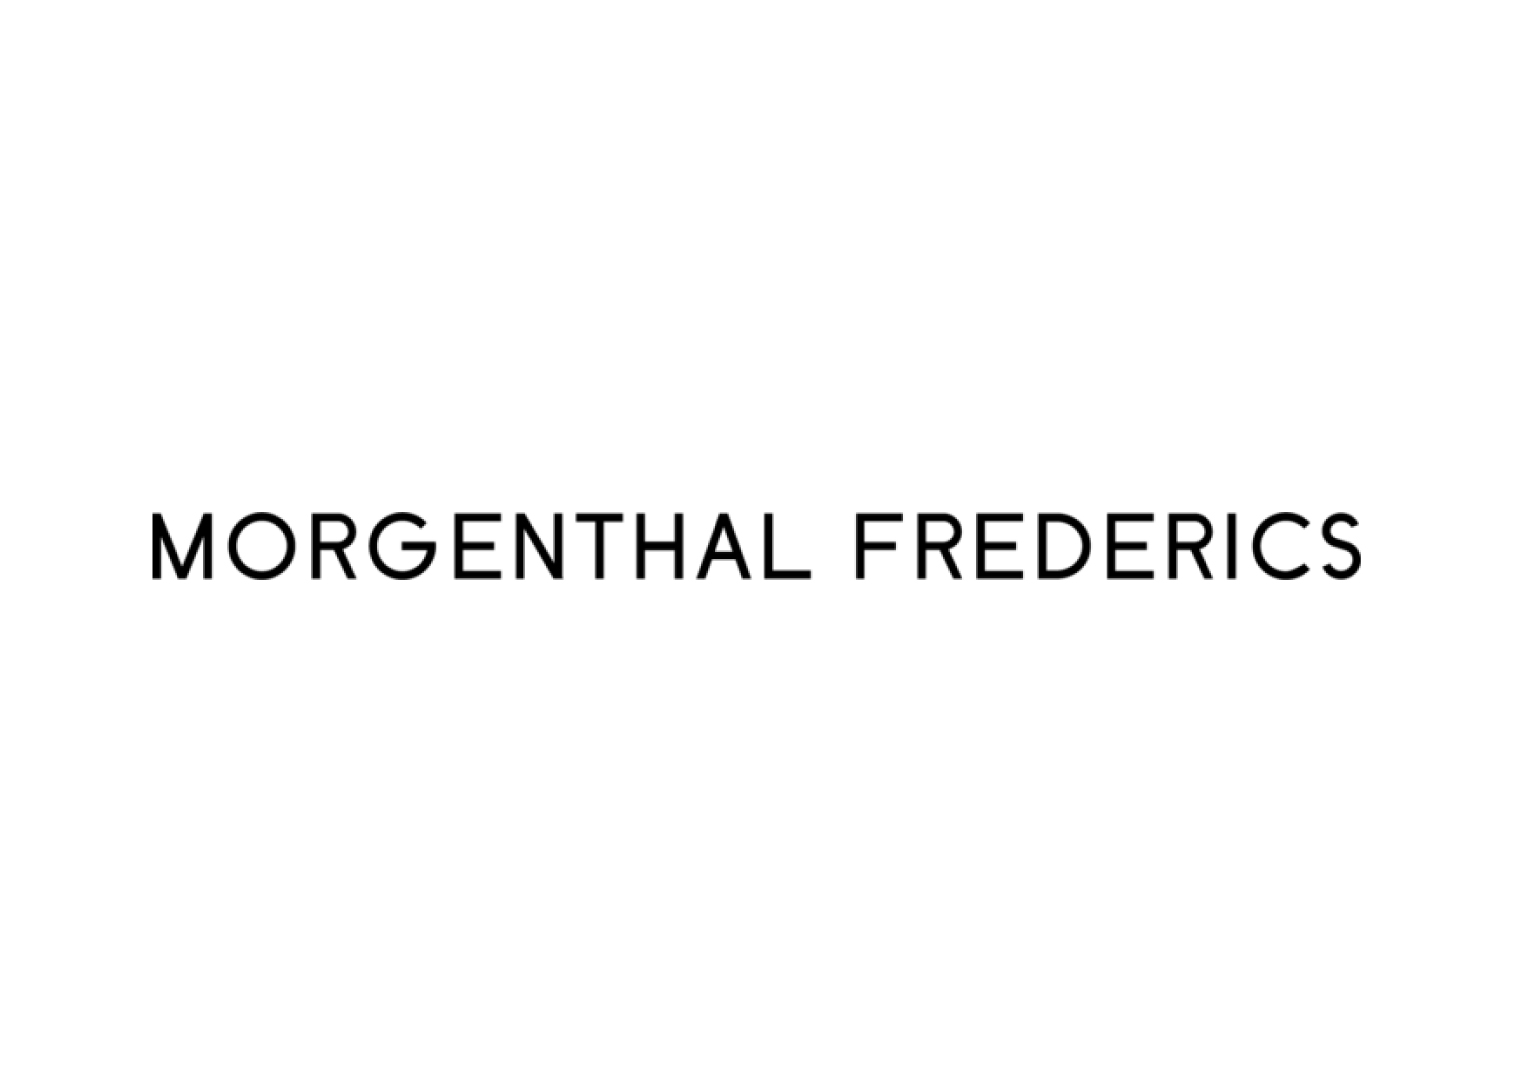 Morgenthal Frederick